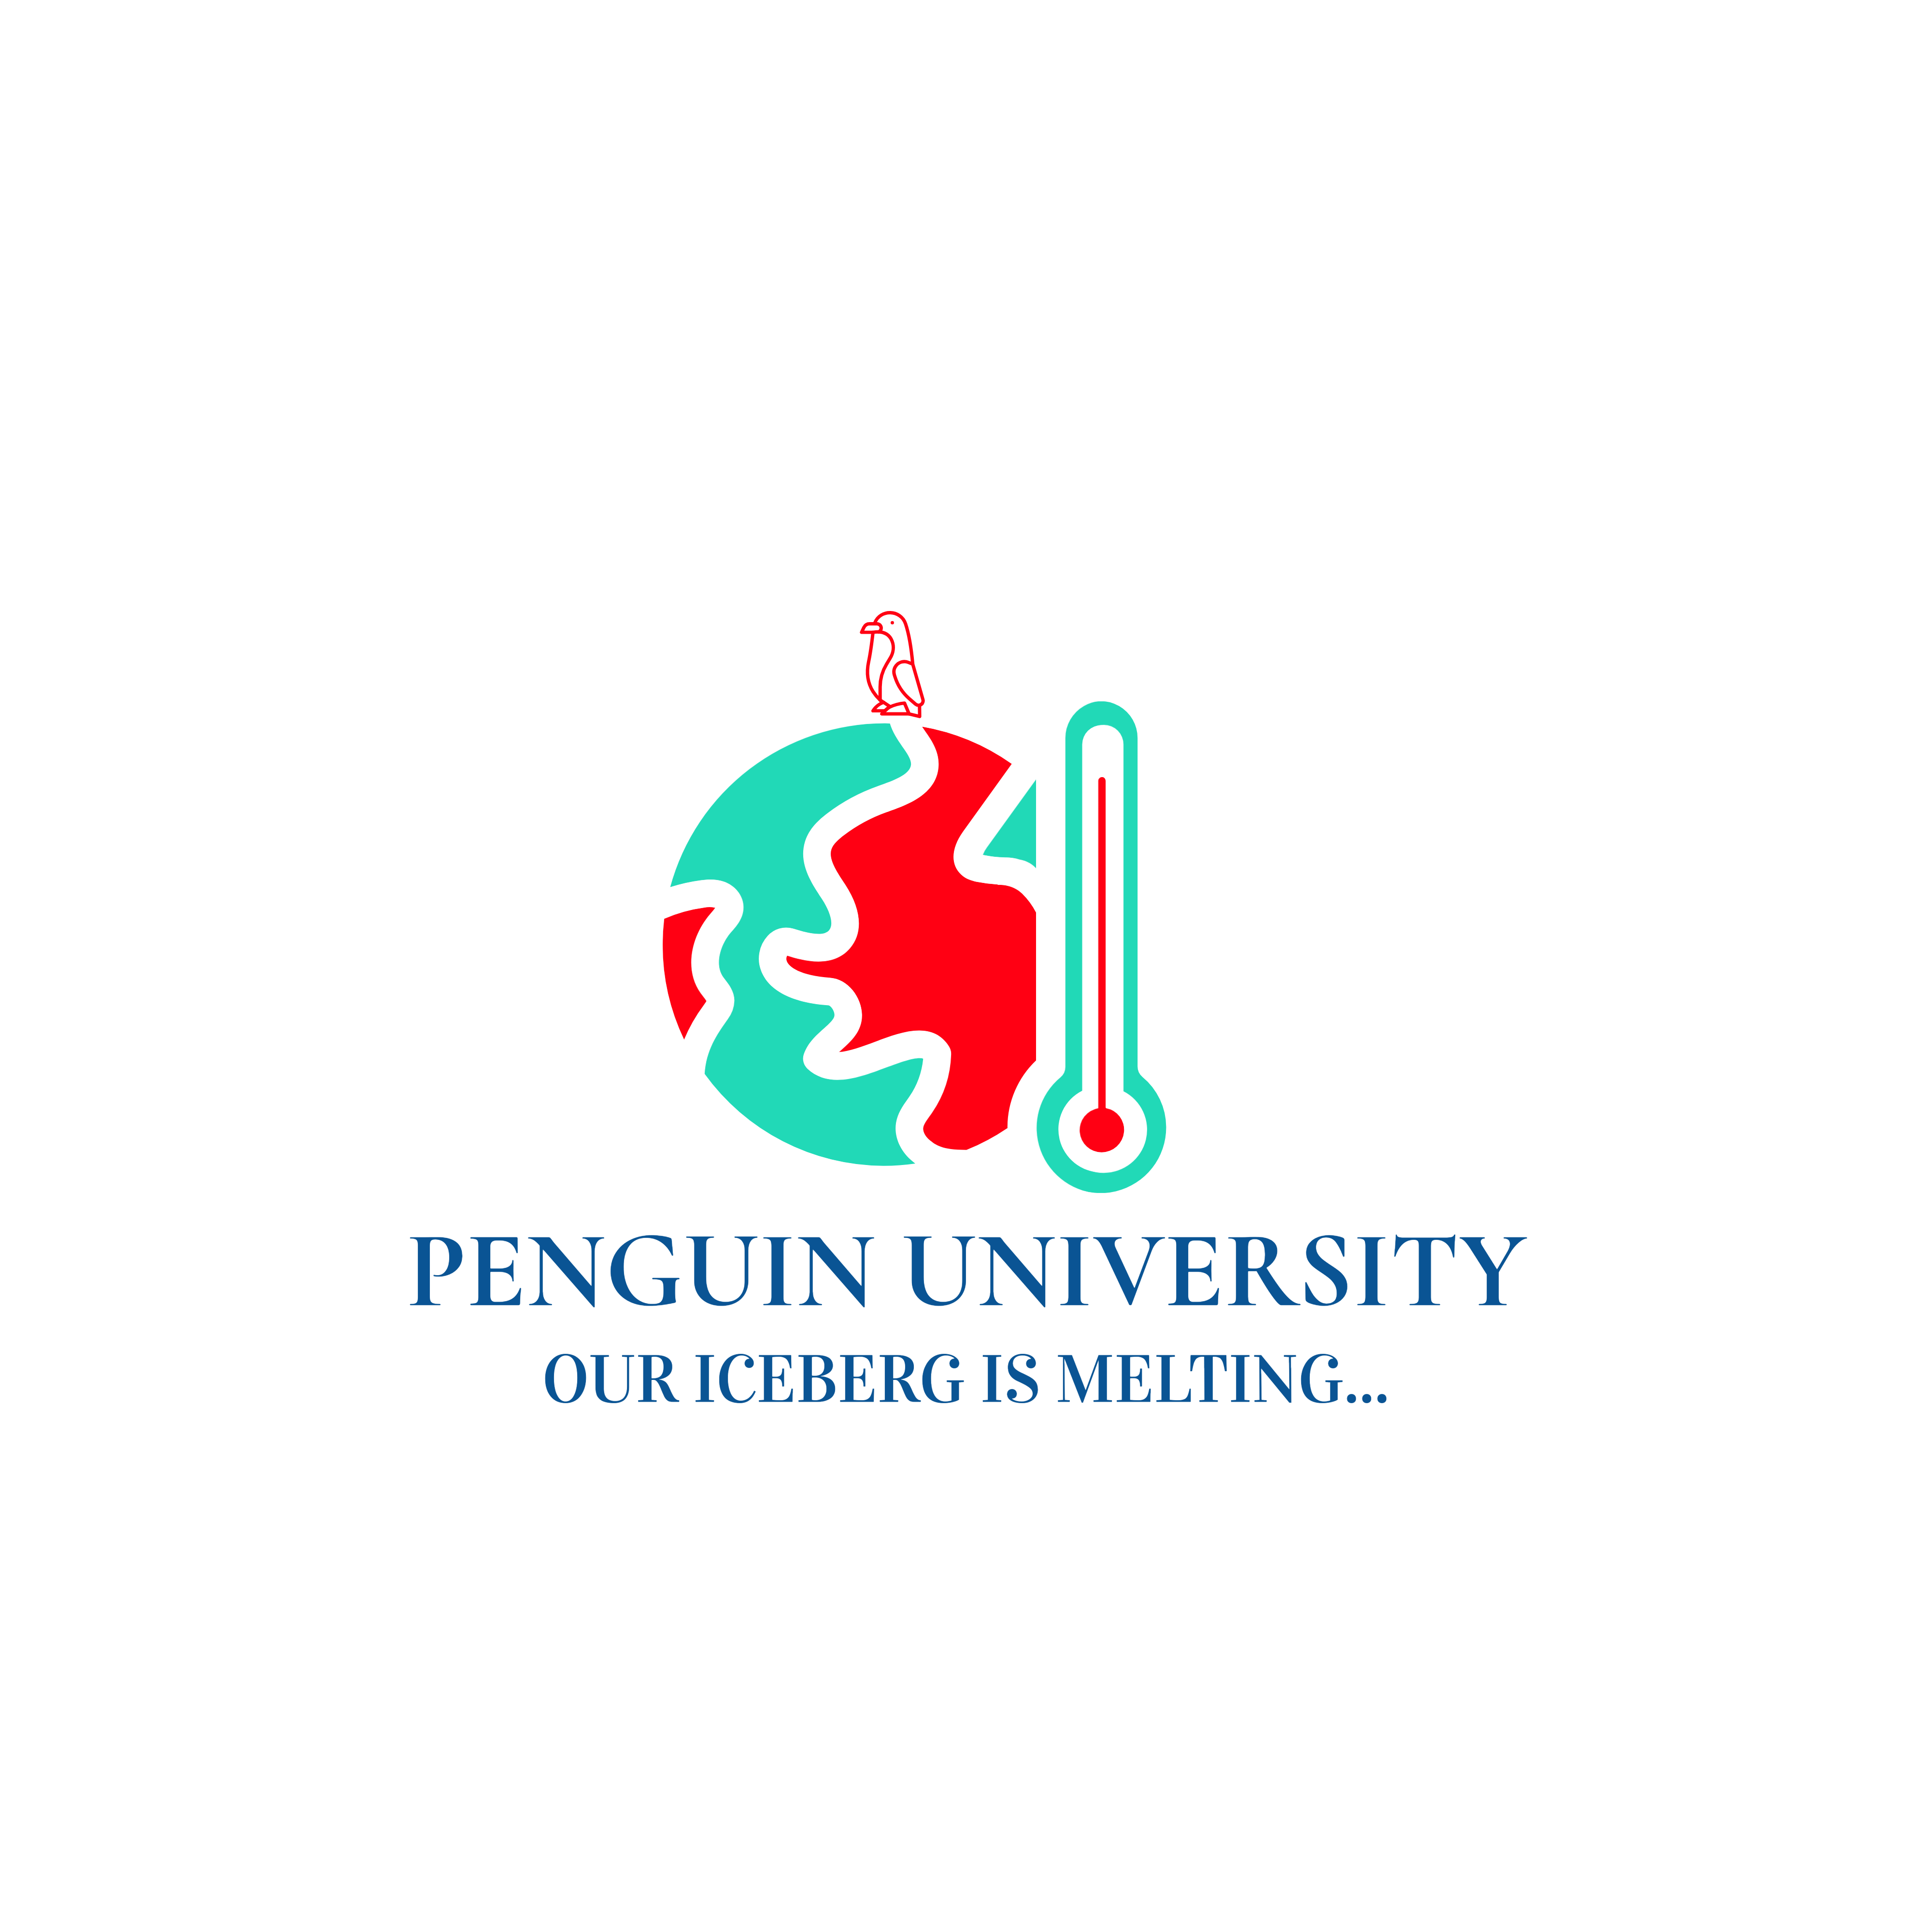 Penguin University logo1.png